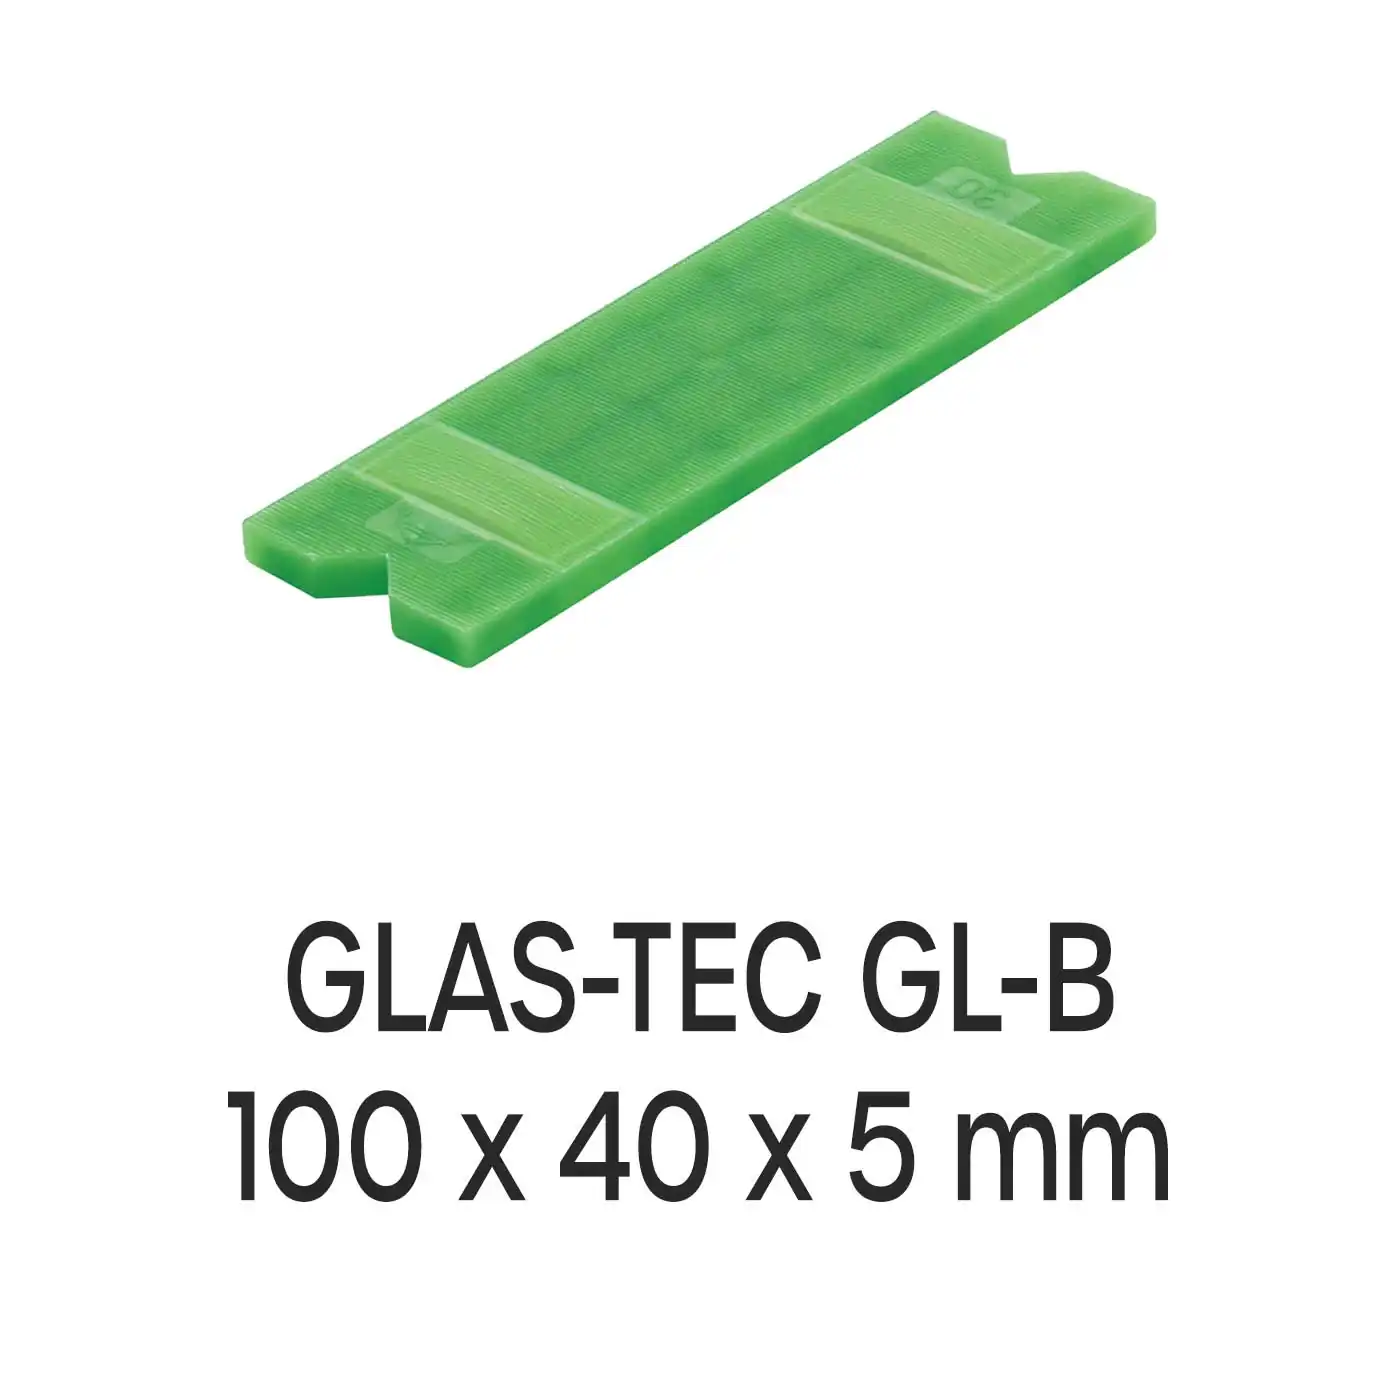 Roto GLAS-TEC GL-B 100 x 40 x 5 mm Verglasungsklötze 500 Stück